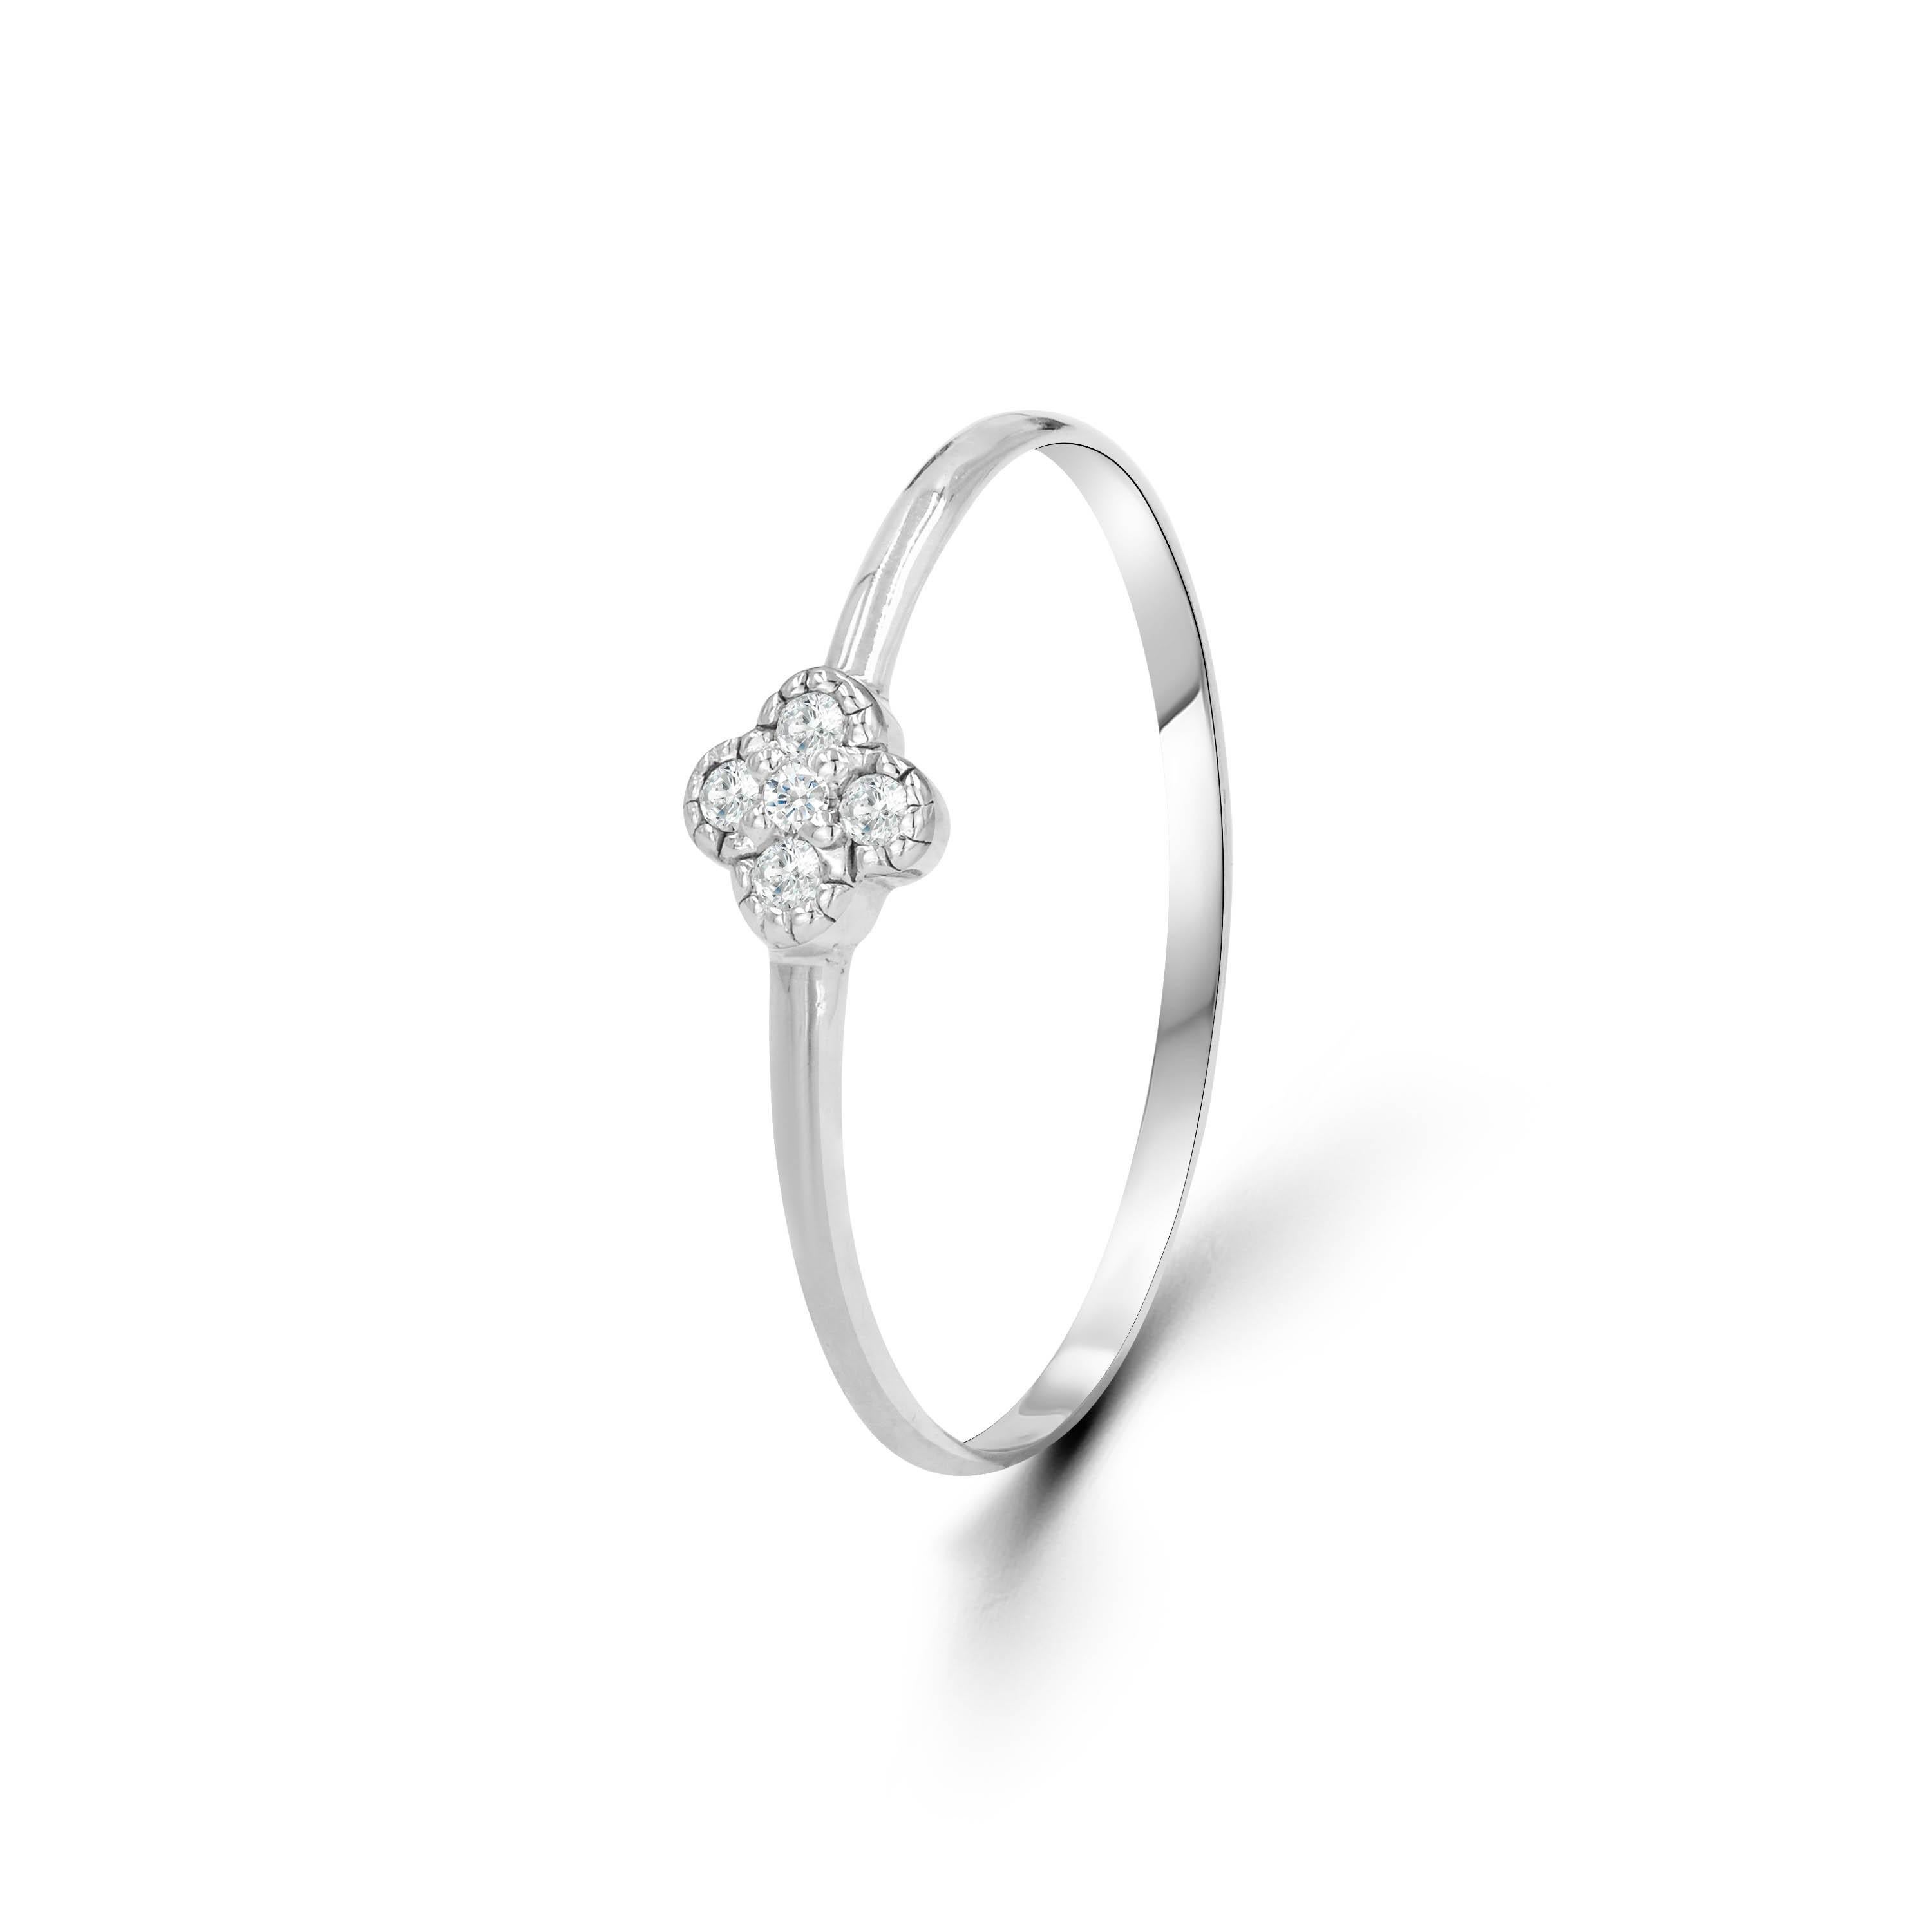 Im Angebot: 14k Gold Kleeblatt-Ring Dainty Minimalistischer Diamantring, stapelbar () 4